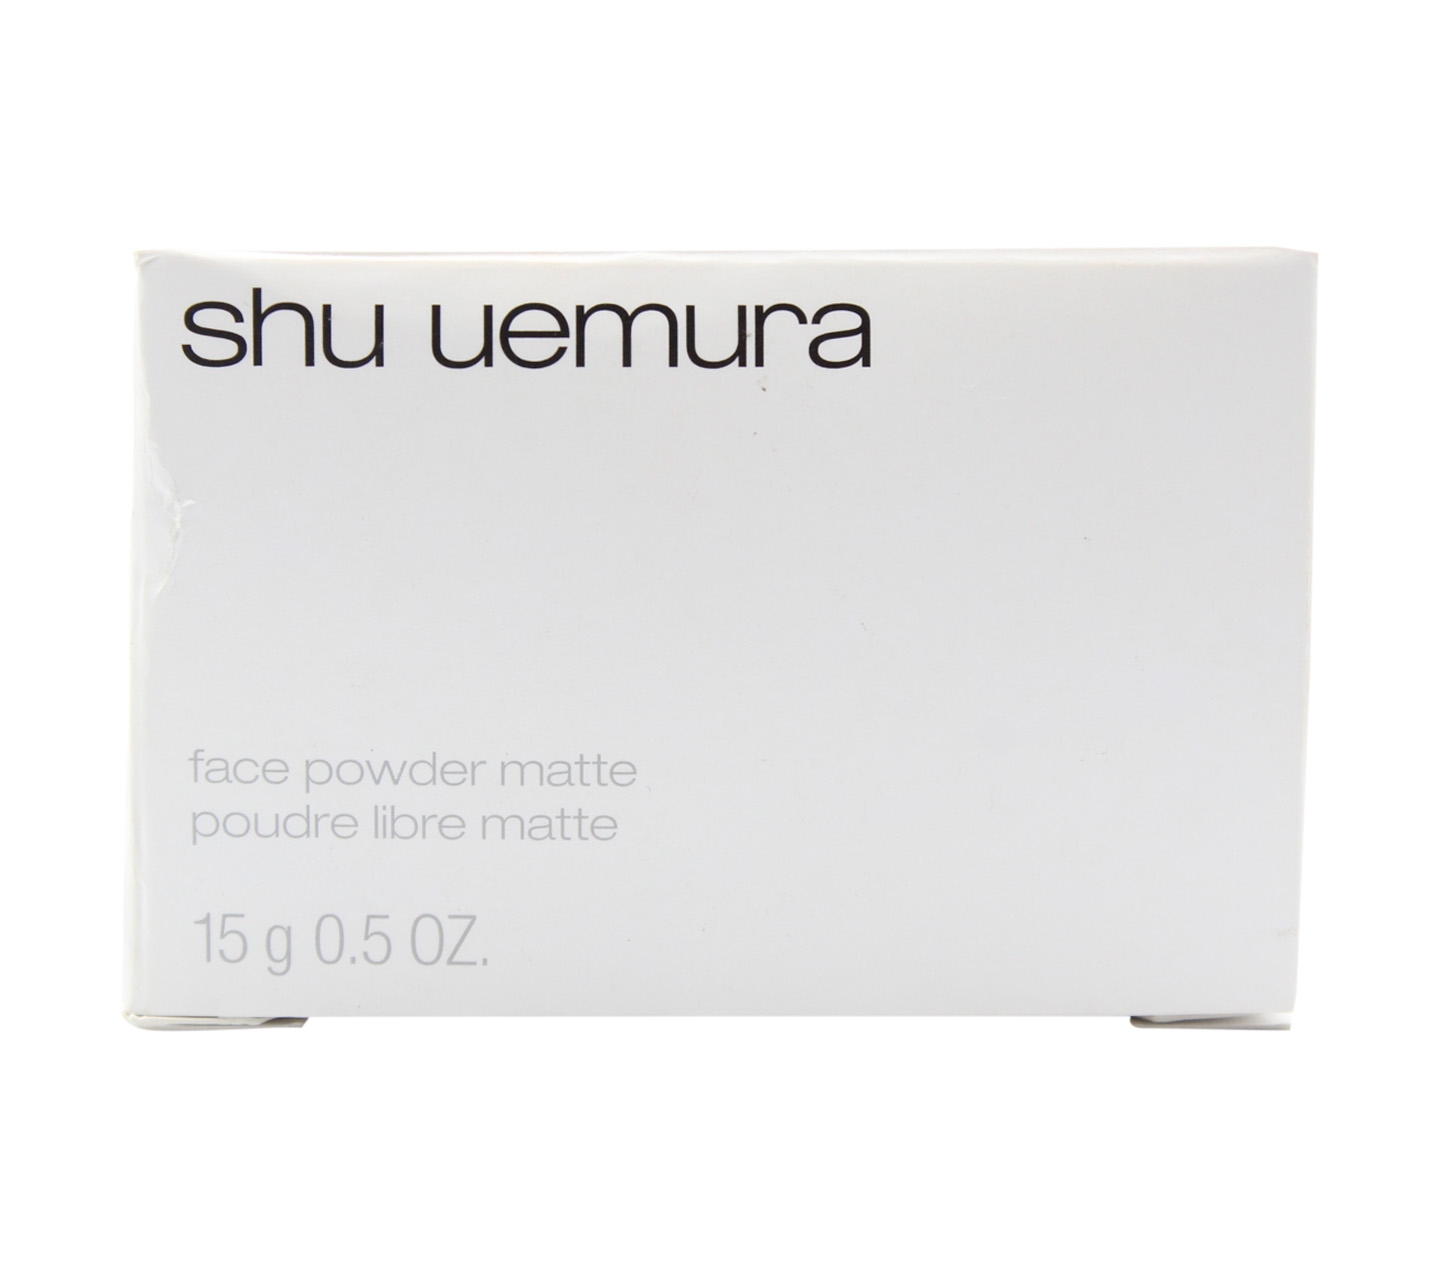 Shu Uemura Colorless Face Powder Matte Faces